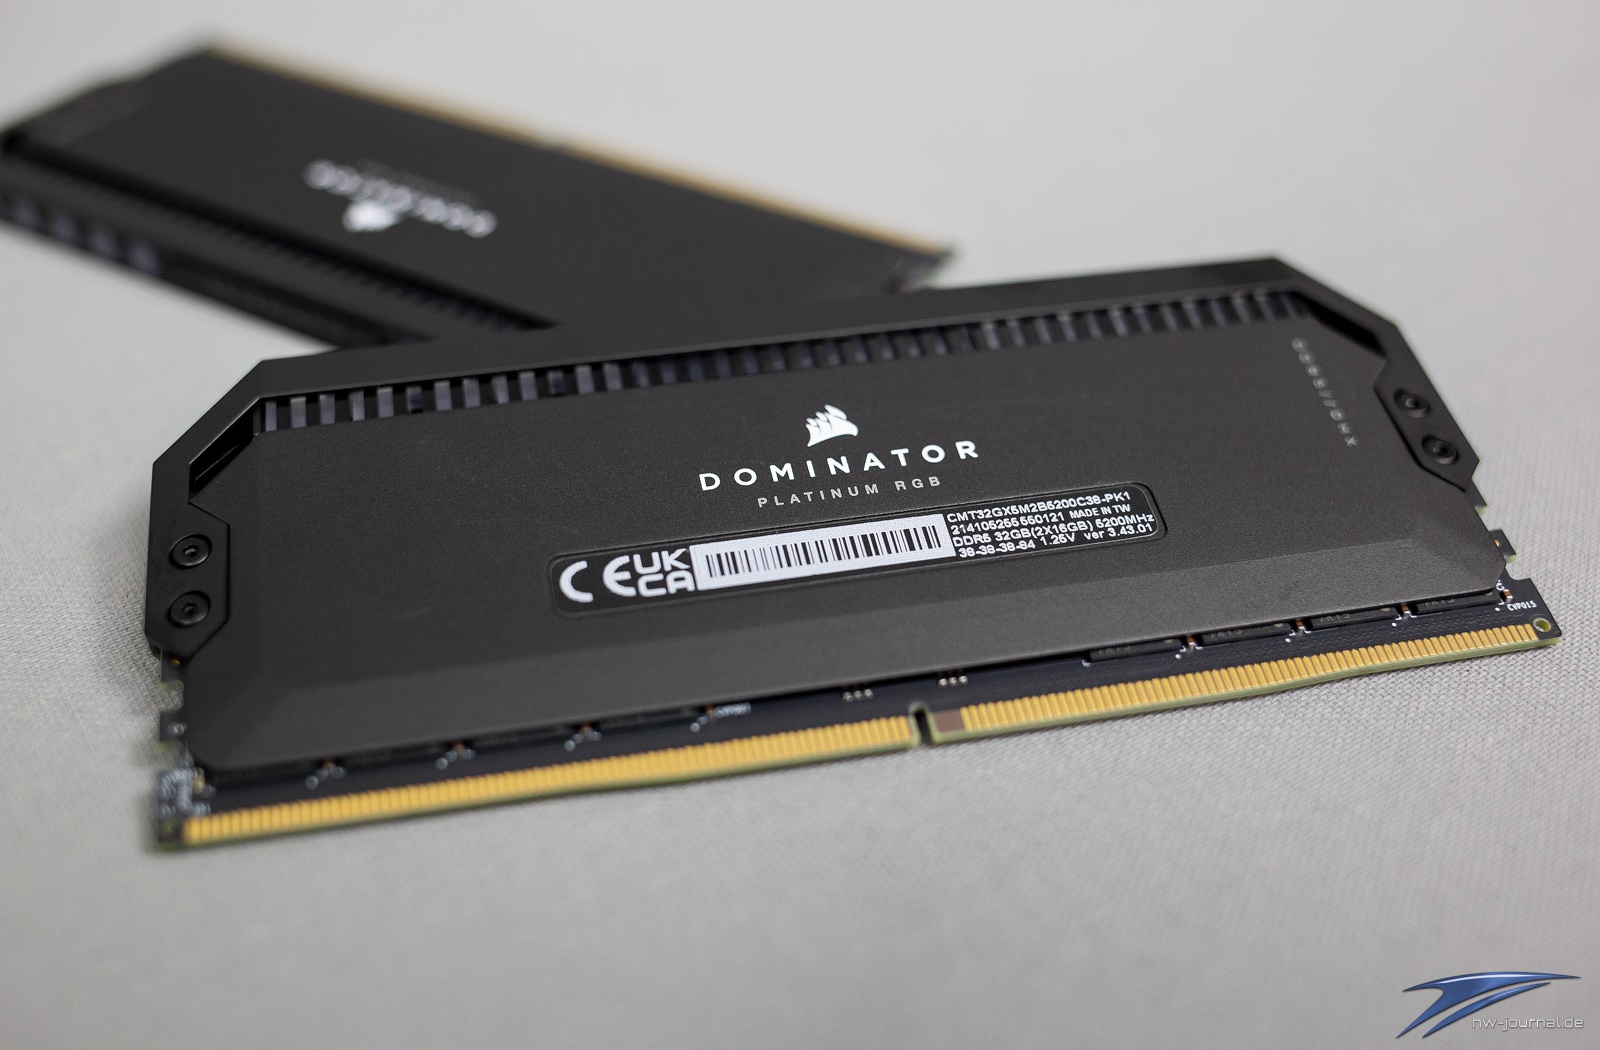 Test: Corsair Dominator Platinum RGB DDR5-5200 - Journal (32GB) #1 - Hardware from Results